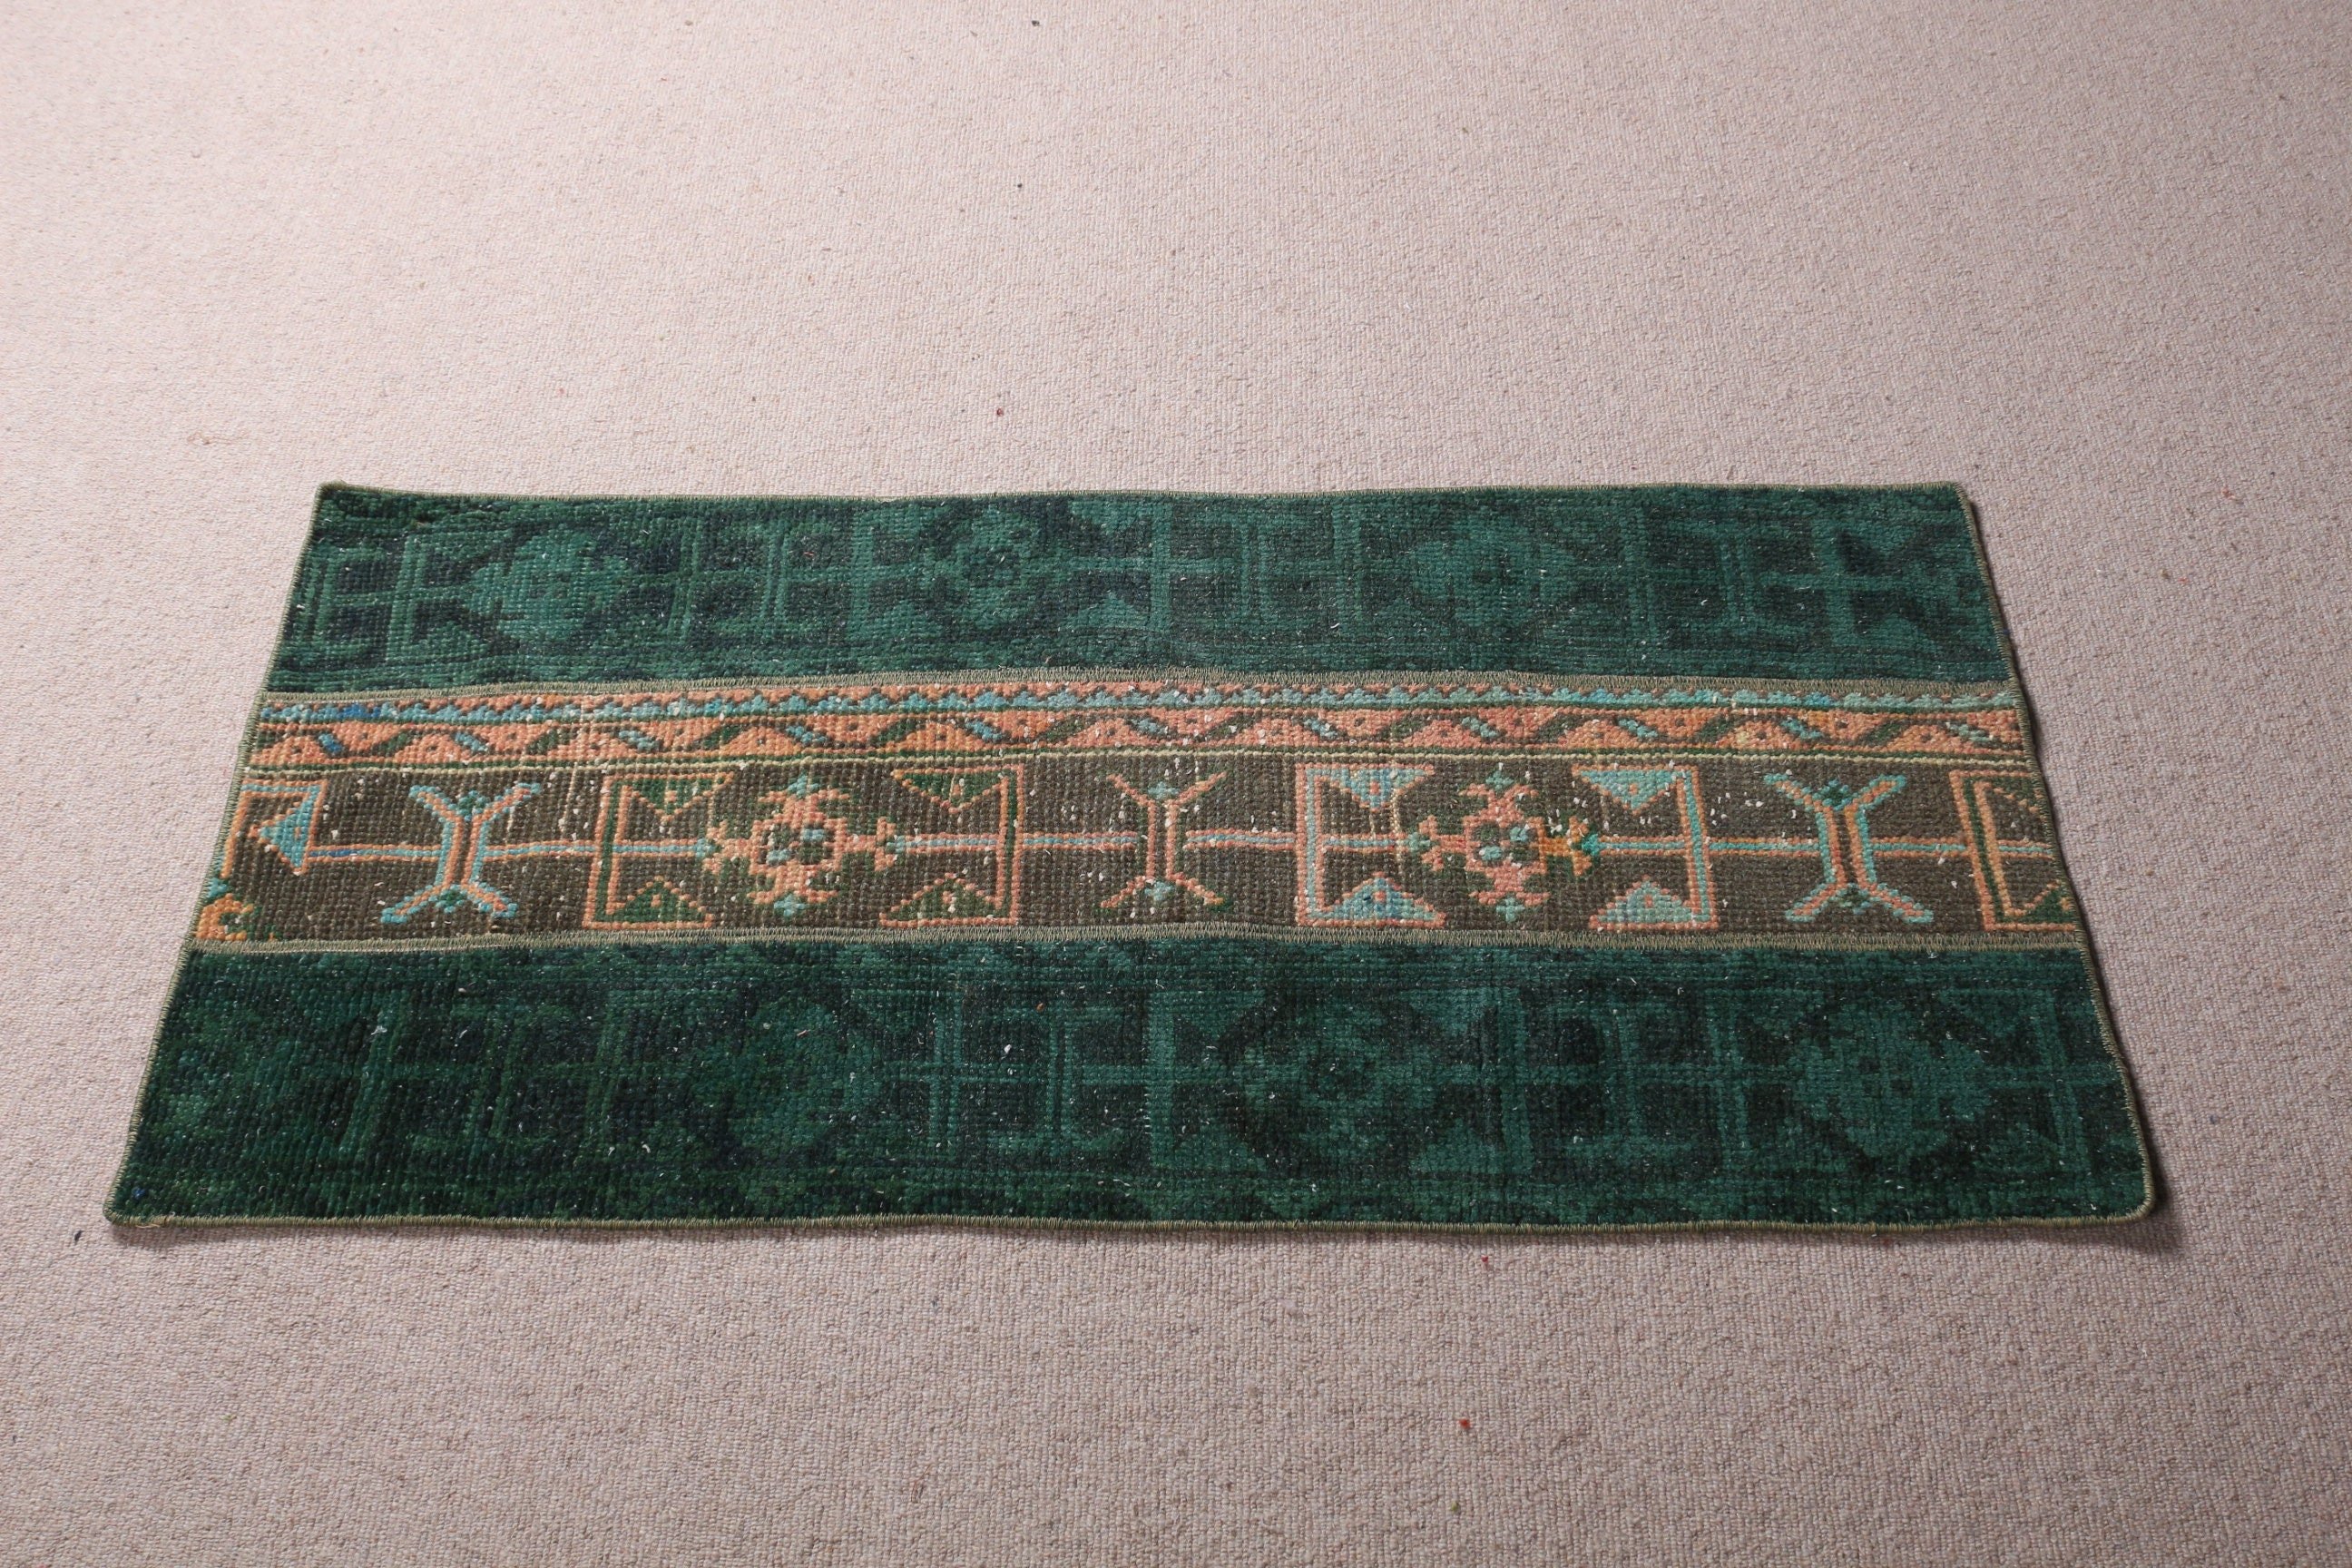 Floor Rug, Vintage Rug, Green  2x4.1 ft Small Rug, Rugs for Car Mat, Car Mat Rug, Bath Rug, Antique Rug, Turkish Rugs